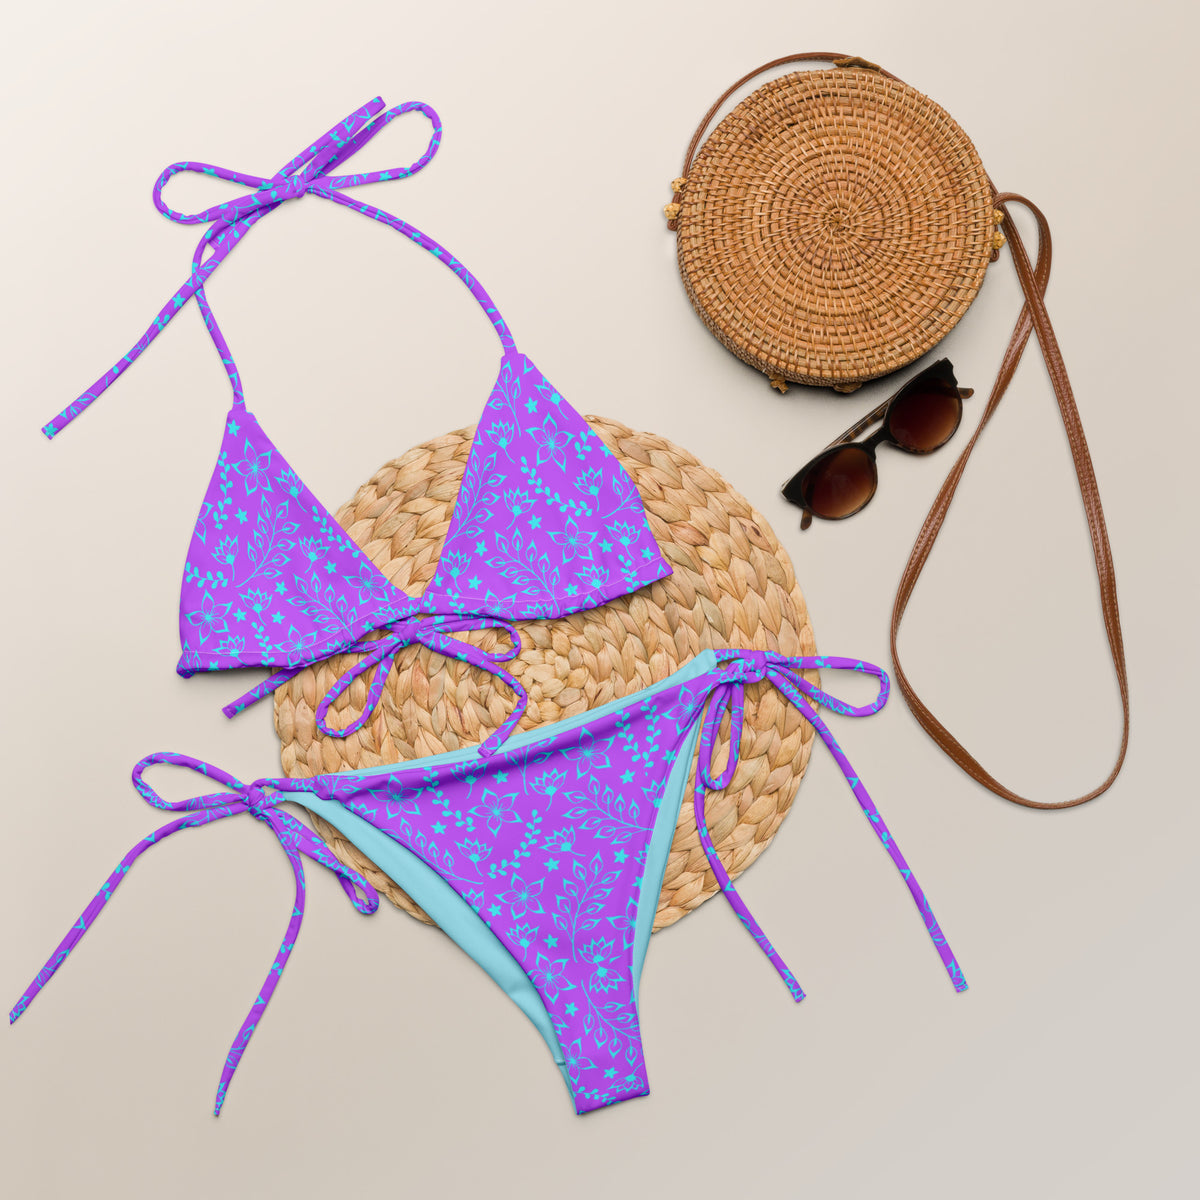 ColieCo Lingerie on X: SPACE theme bikini set - strappy longline